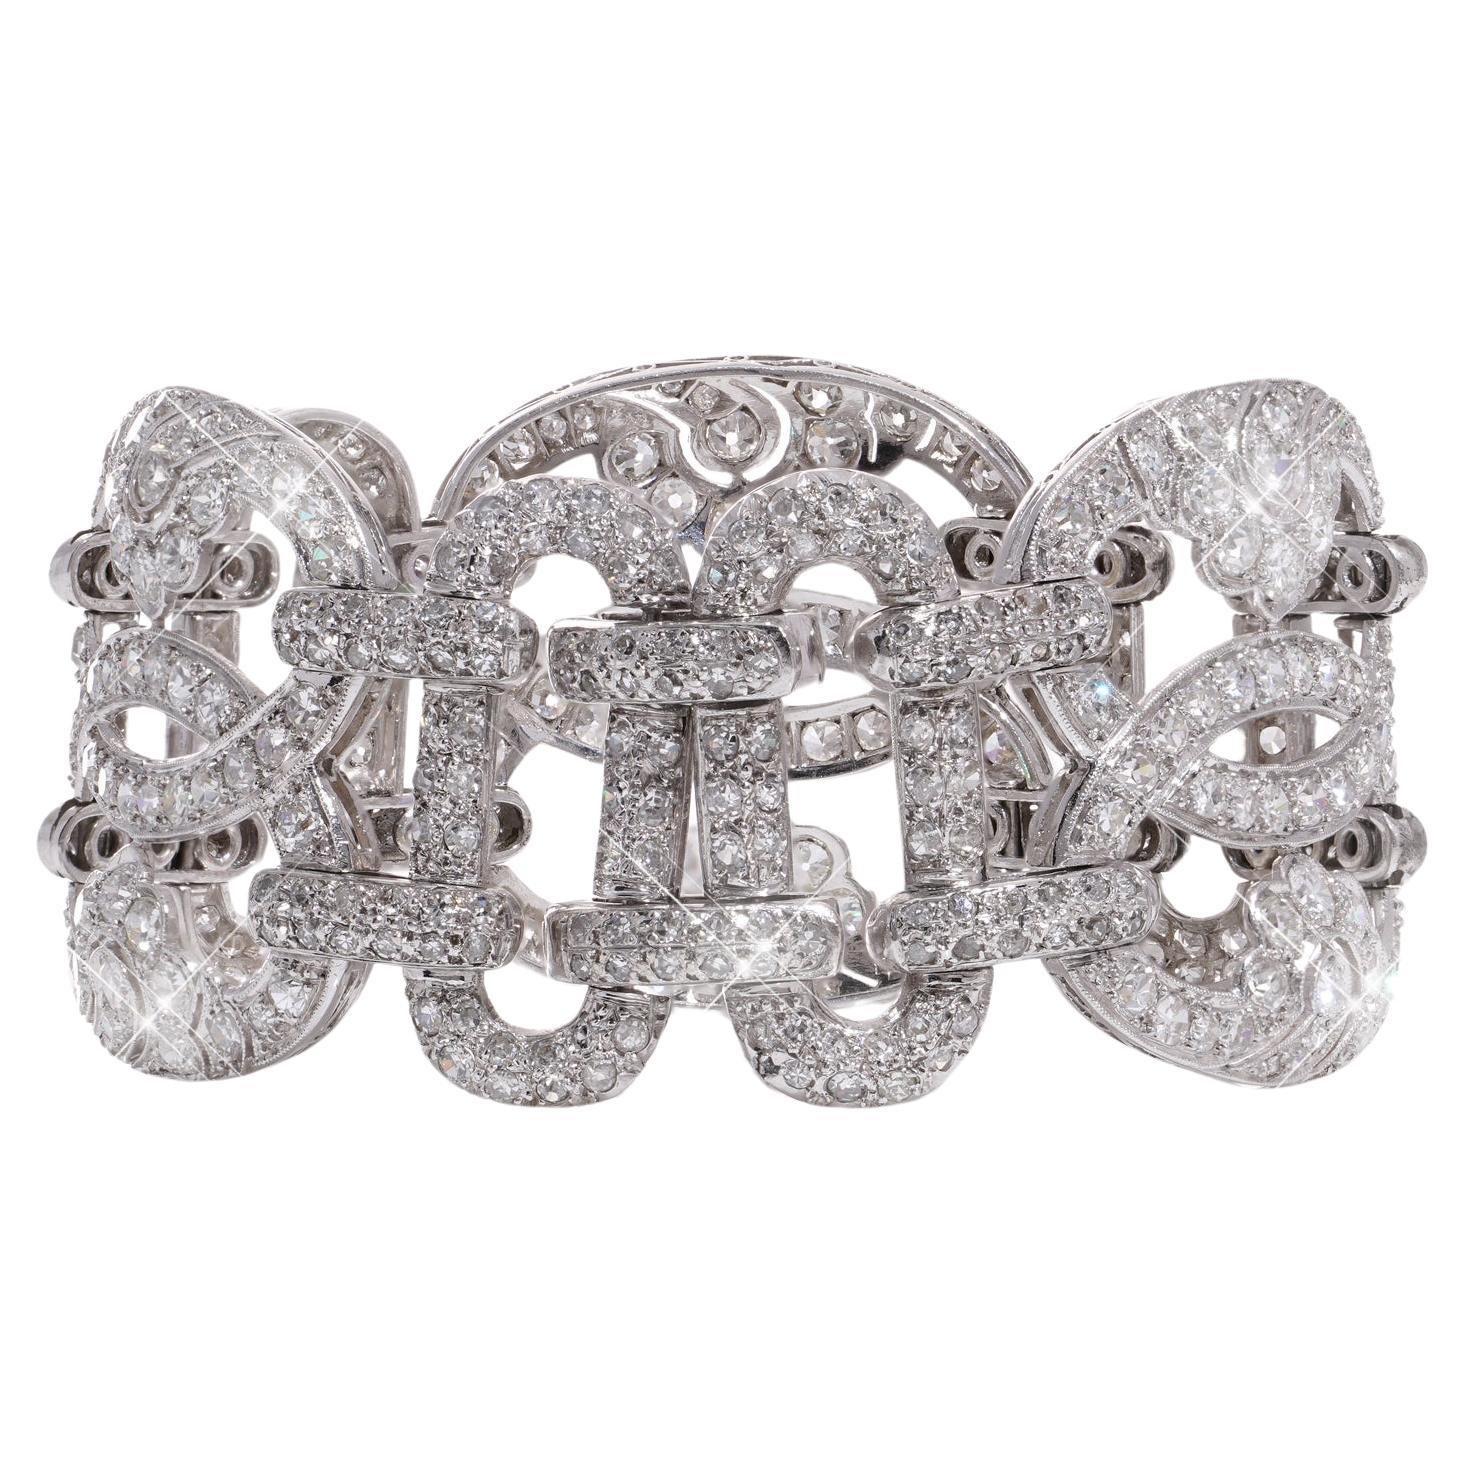 Art Deco platinum 13.38 carats of diamonds link bracelet. 
X-Ray been tested positive for Platinum. 

Dimensions - 
Weight: 54 grams
Size: Length x width x depth: 16 x 3.3 cm 

Diamonds - 
Cut: Old-European, round brilliant
Quantity of diamonds: